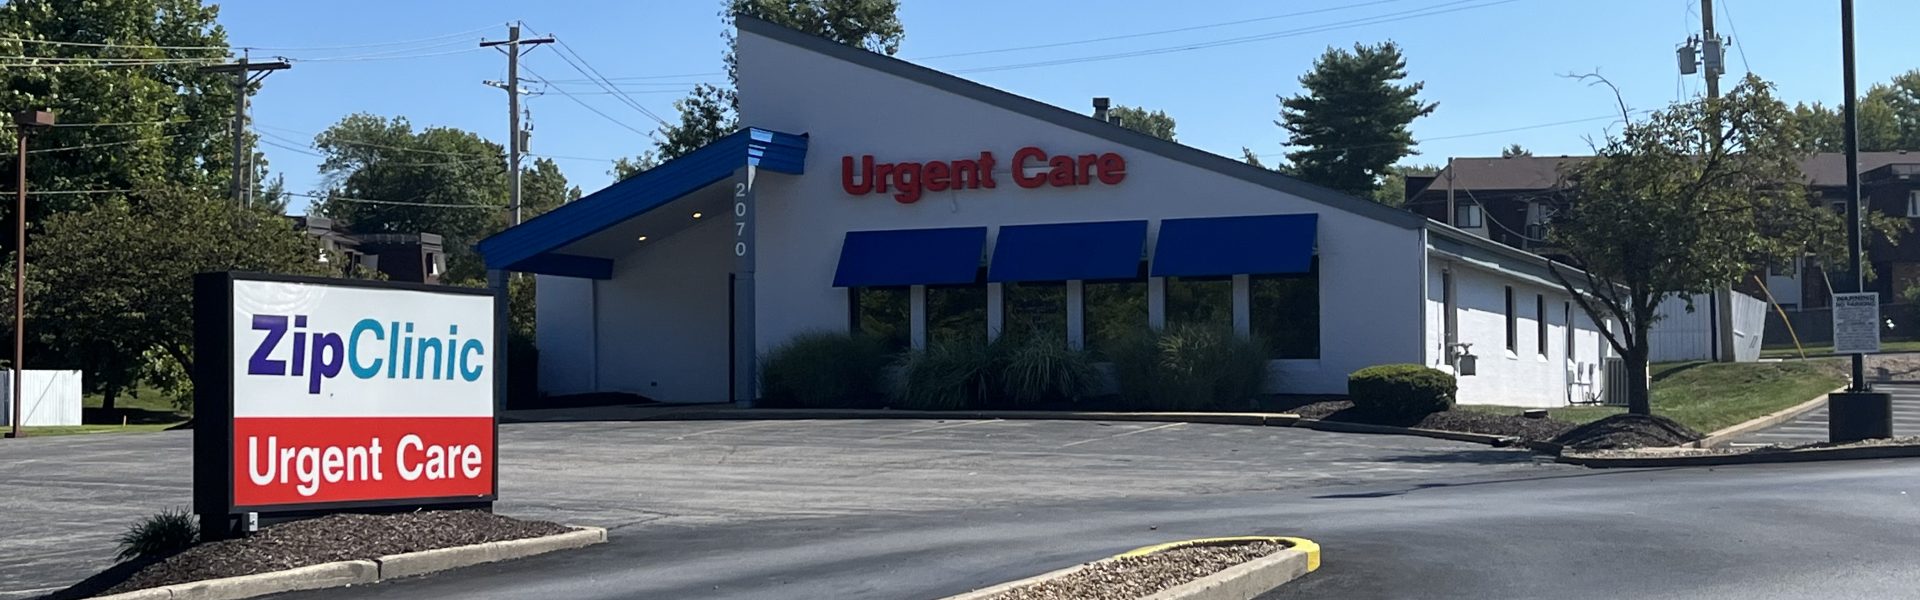 ZipClinic Urgent Care - Maryland Heights, MO